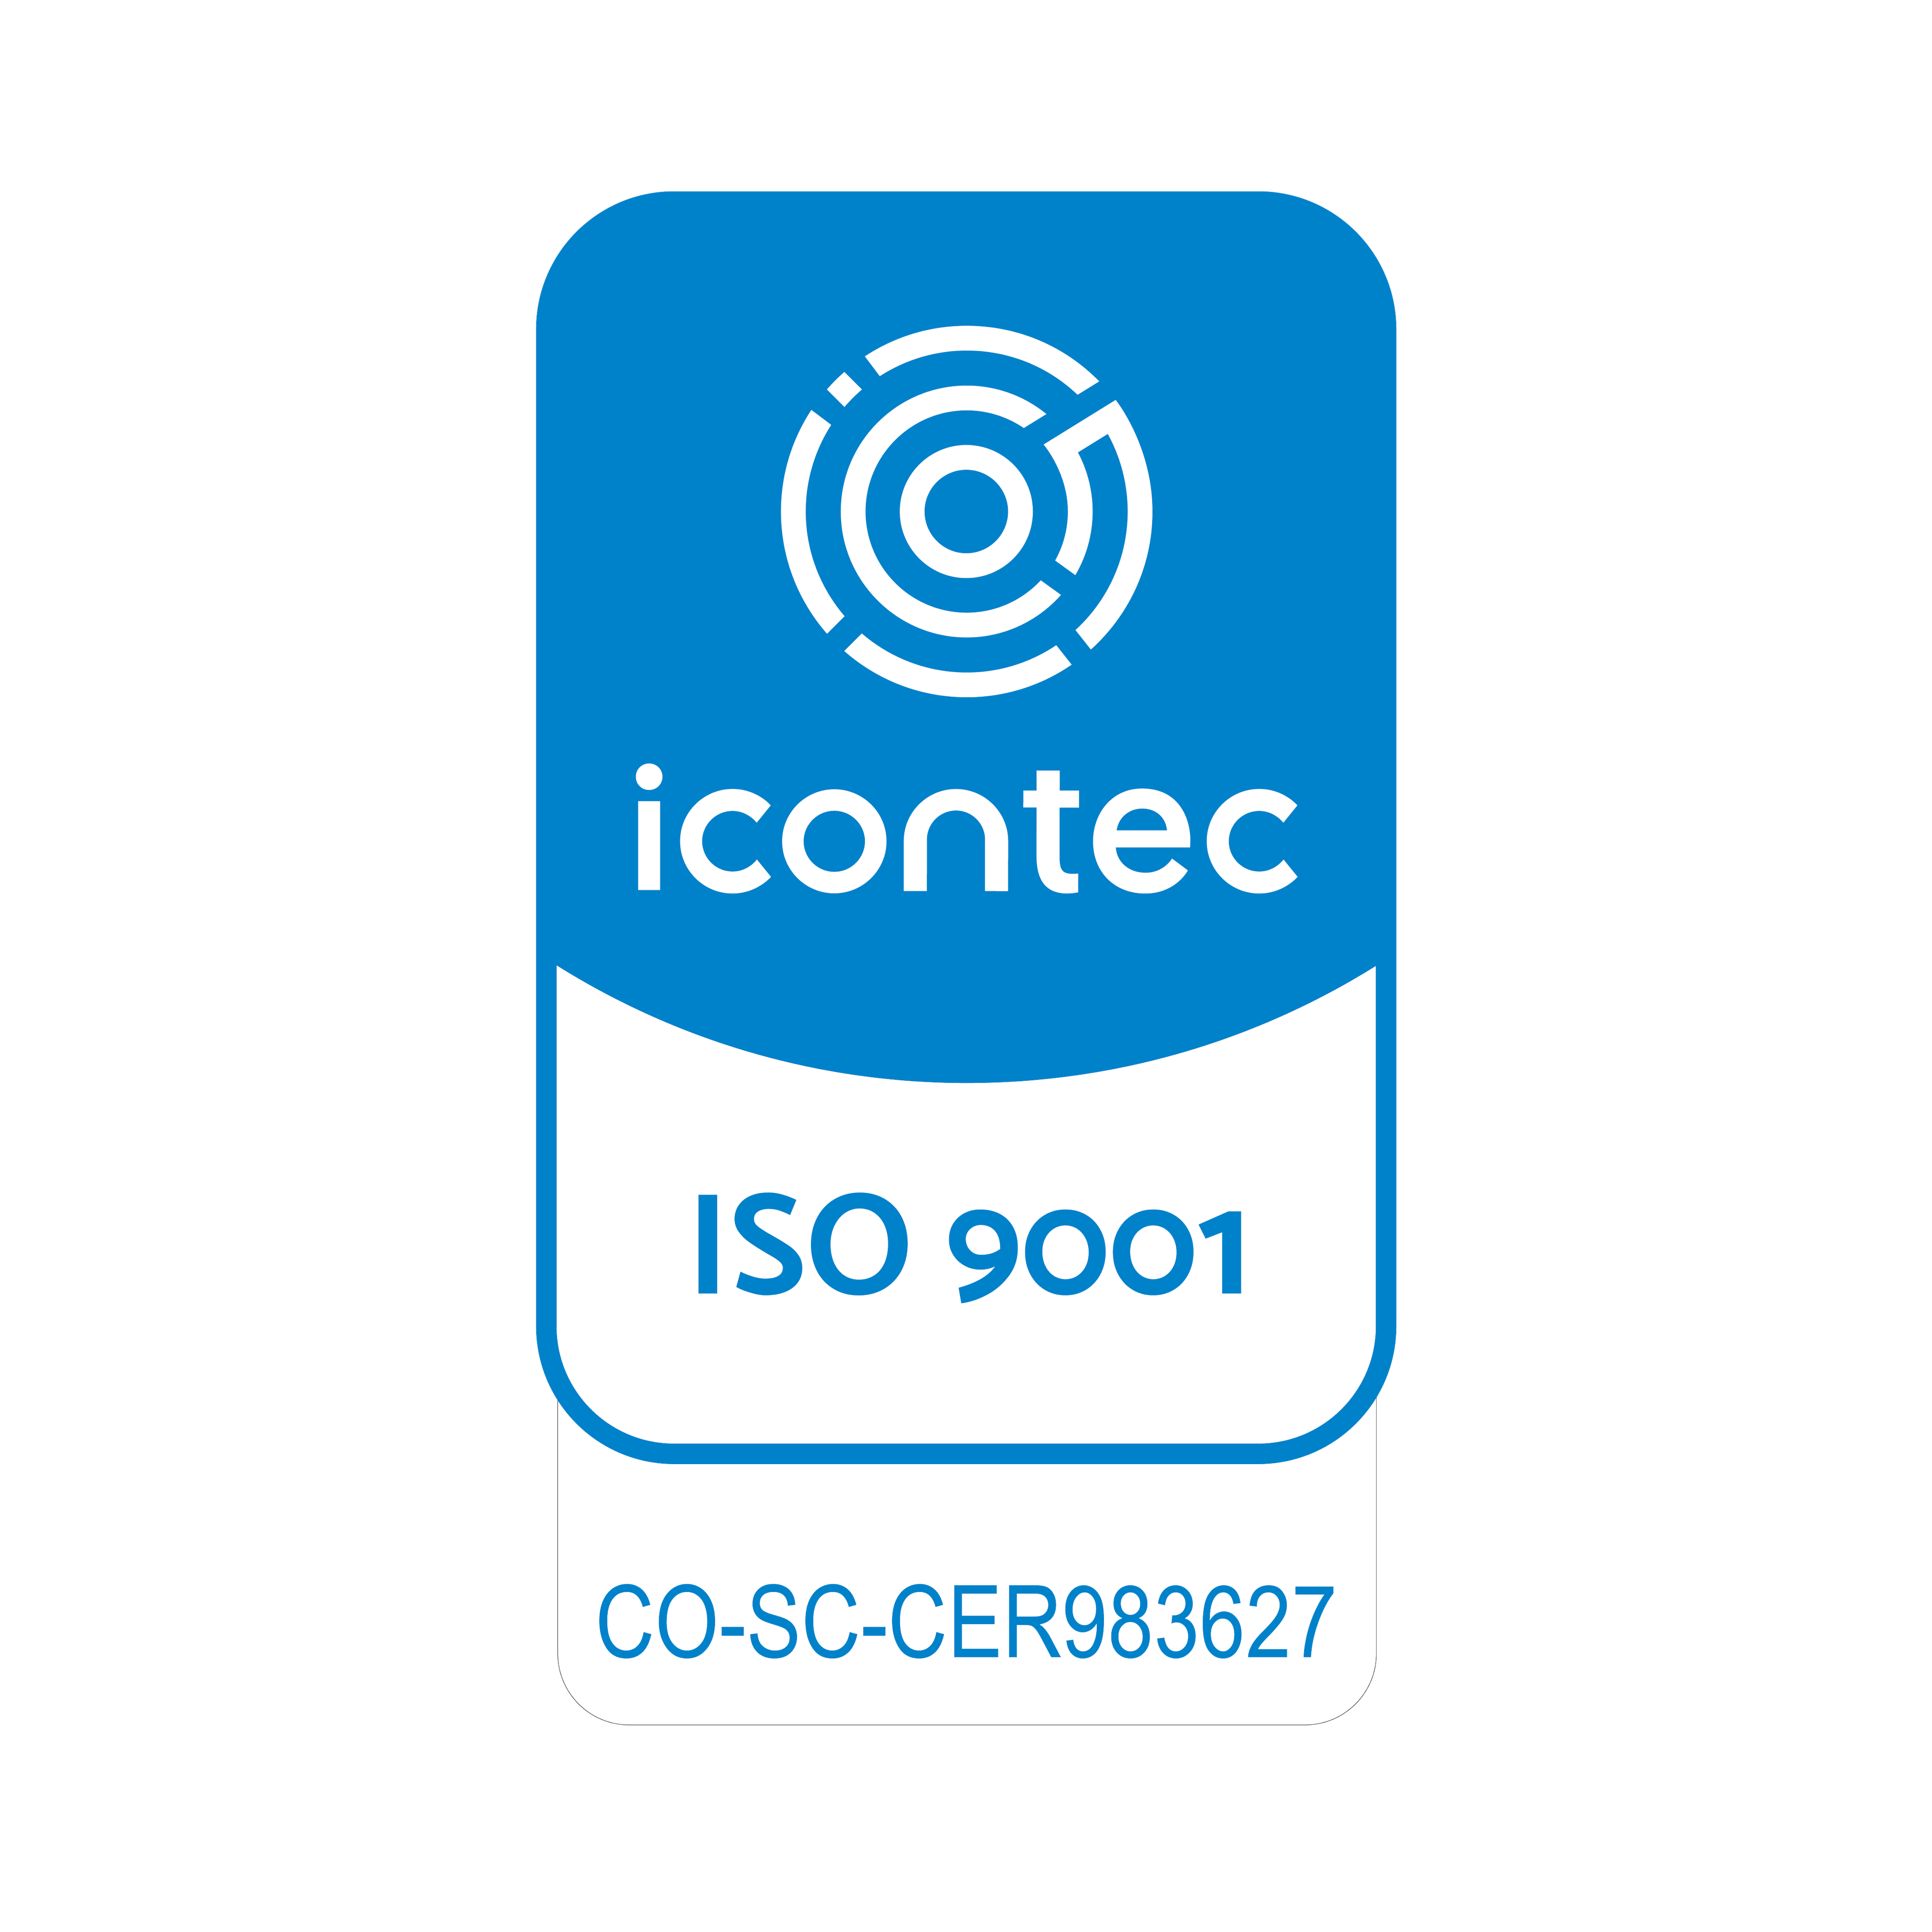 ICONTEC - ISO 9001 - PREVENTIS